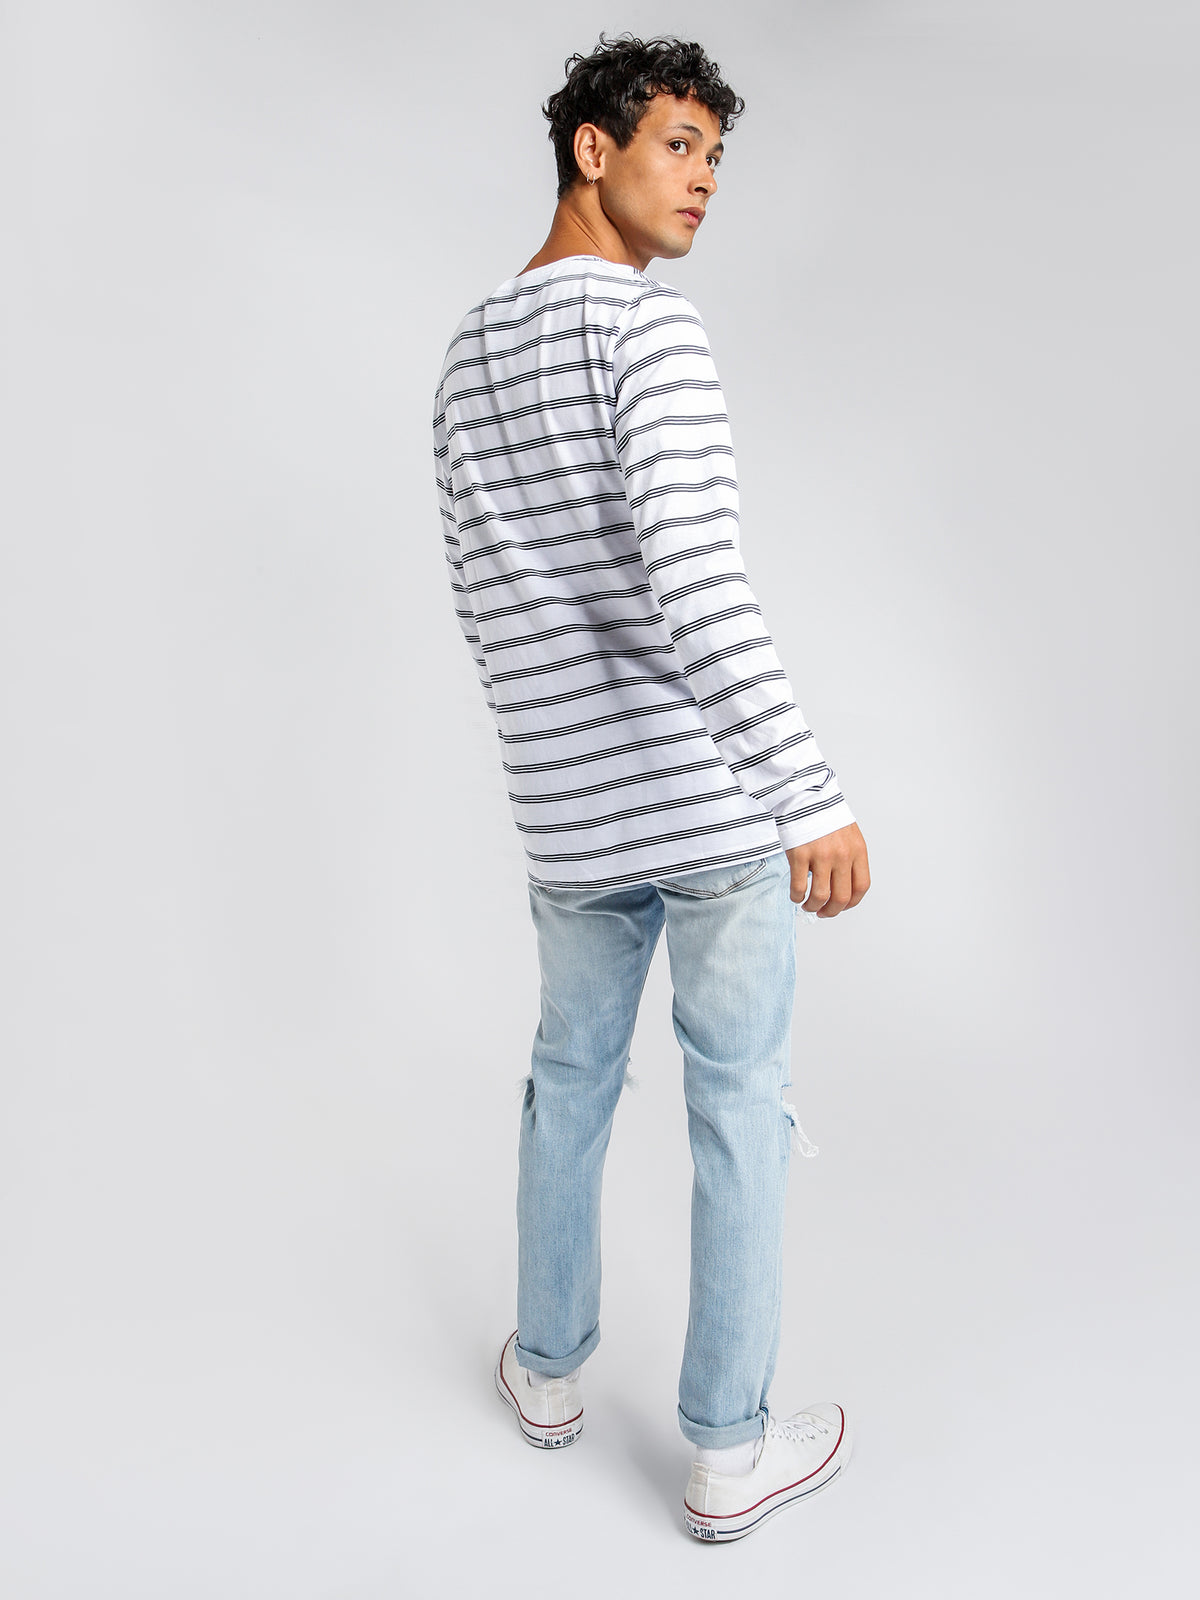 Chase Long Sleeve Stripe T-Shirt in Navy &amp; White